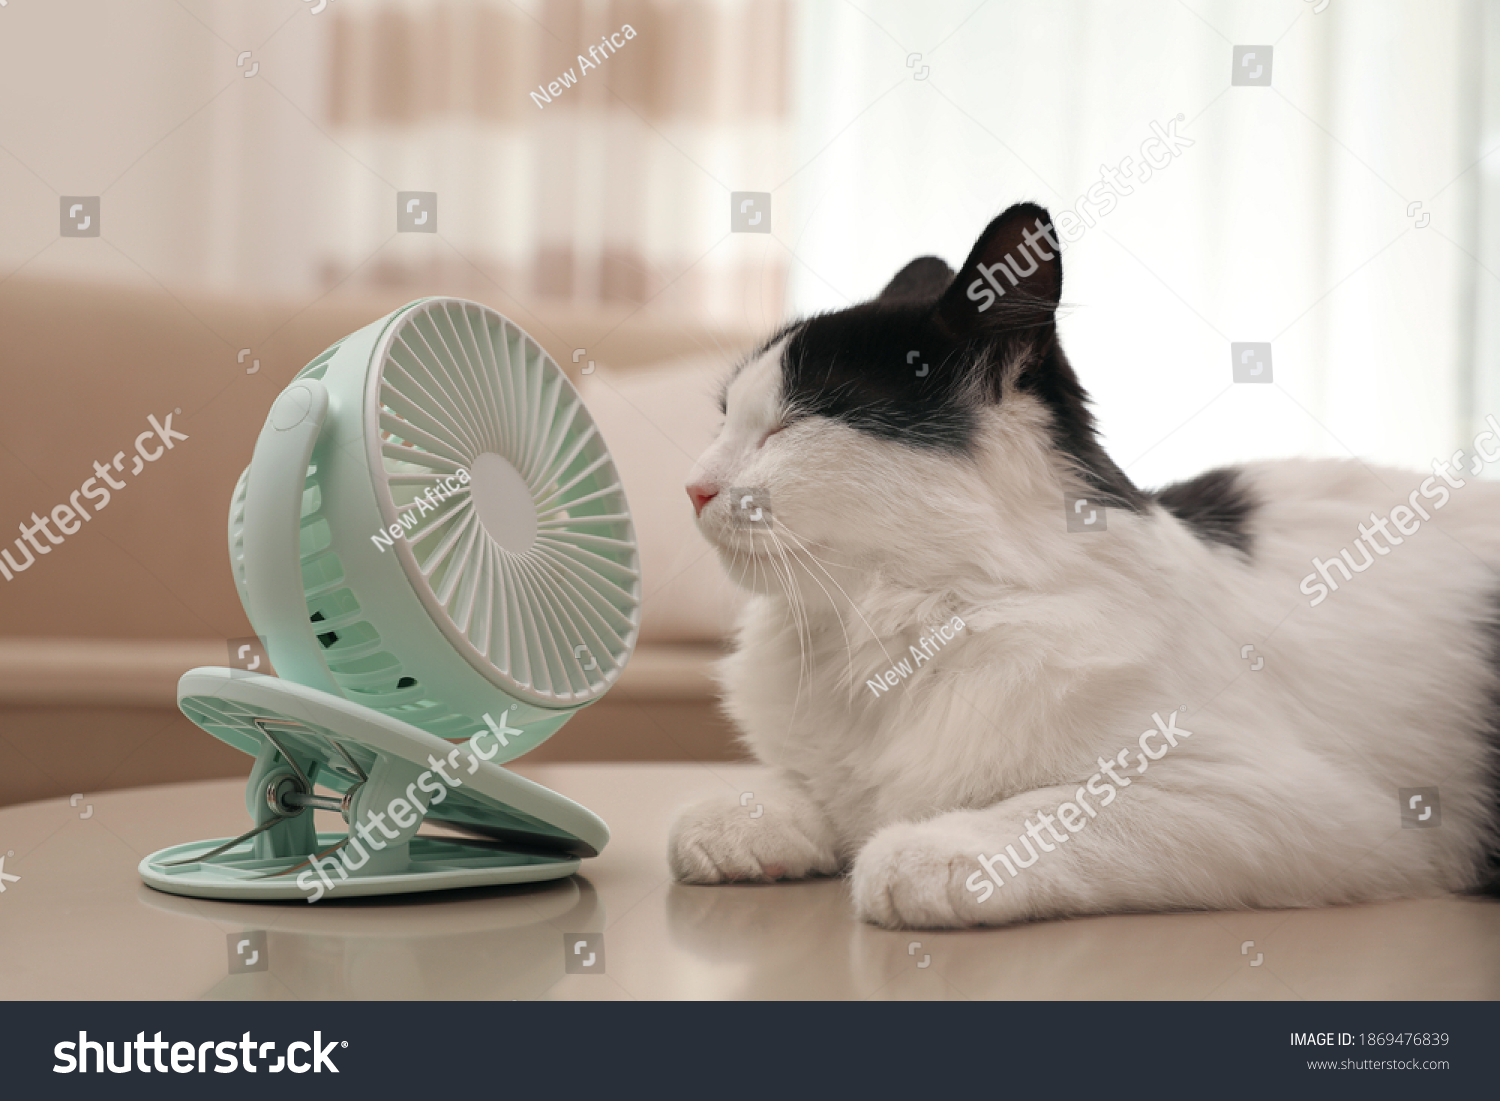 Cute fluffy cat enjoying air flow from fan on table indoors. Summer heat #1869476839